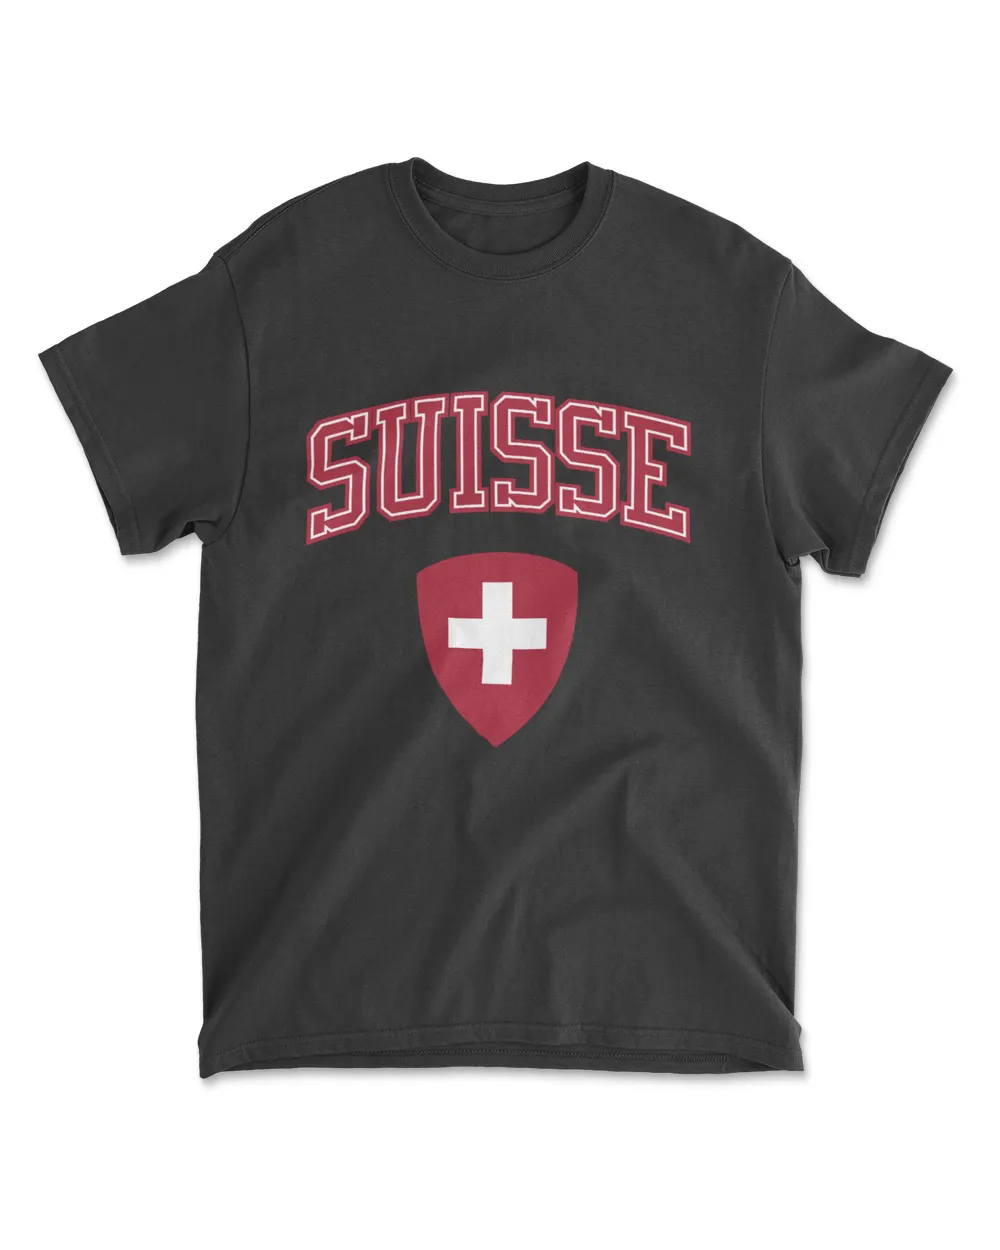 Switzerland + Coat of Arms T-Shirt